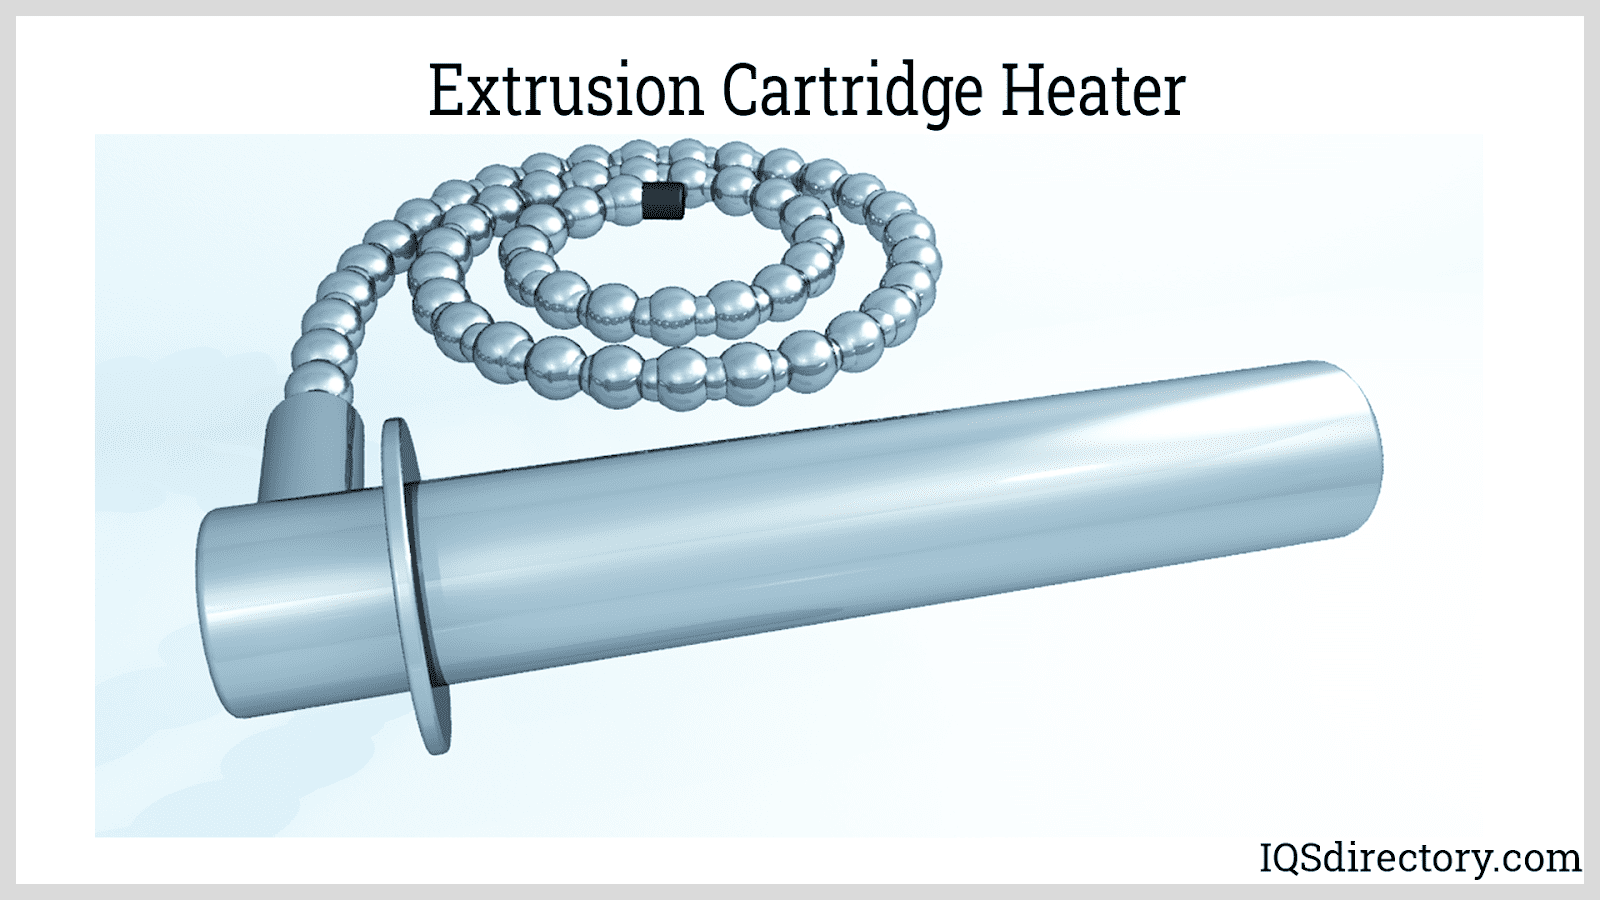 Extrusion Cartridge Heater